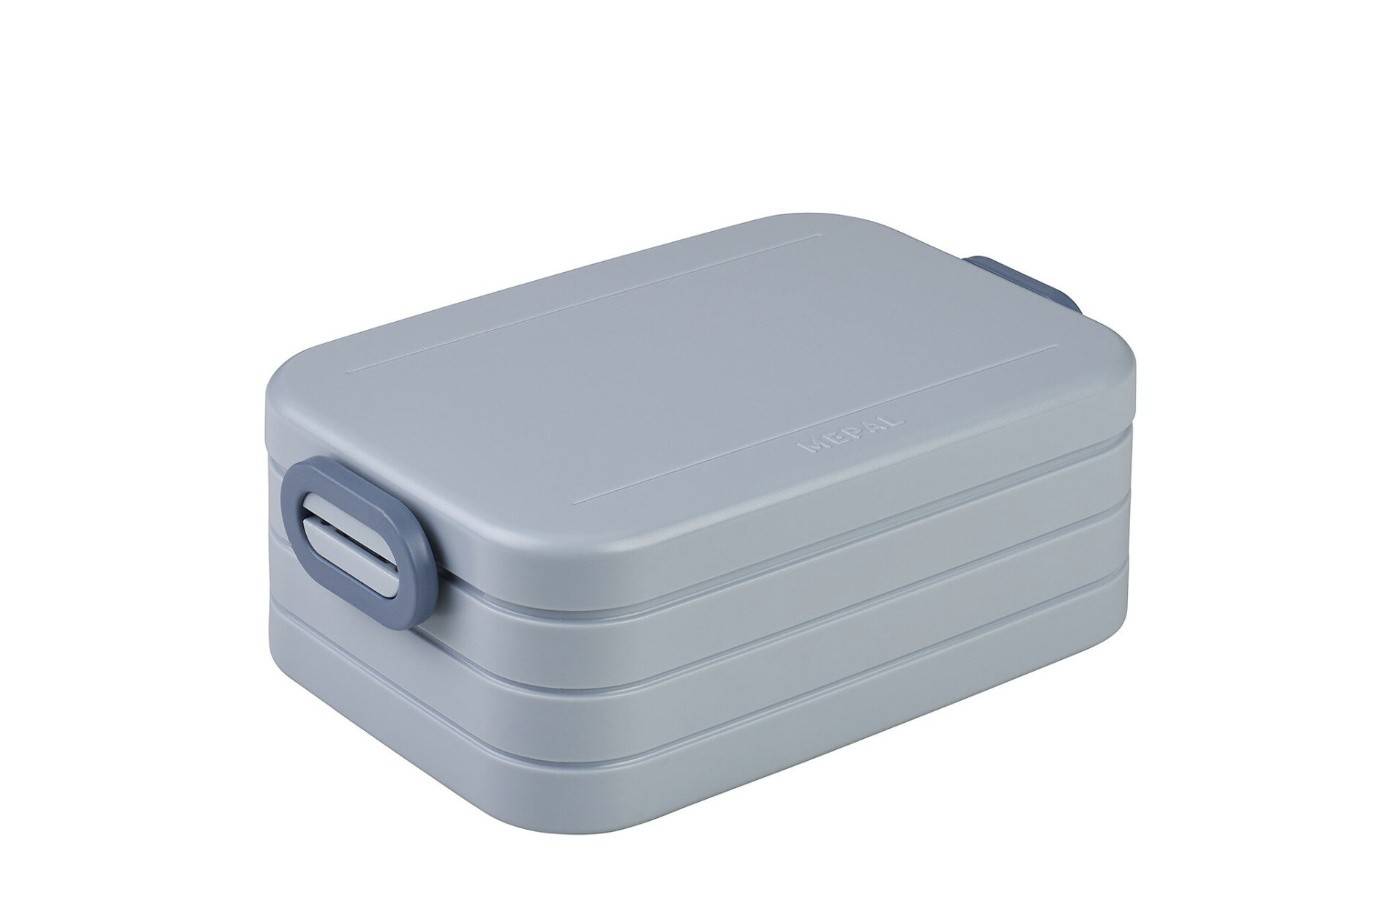 Mepal Bento Lunchbox